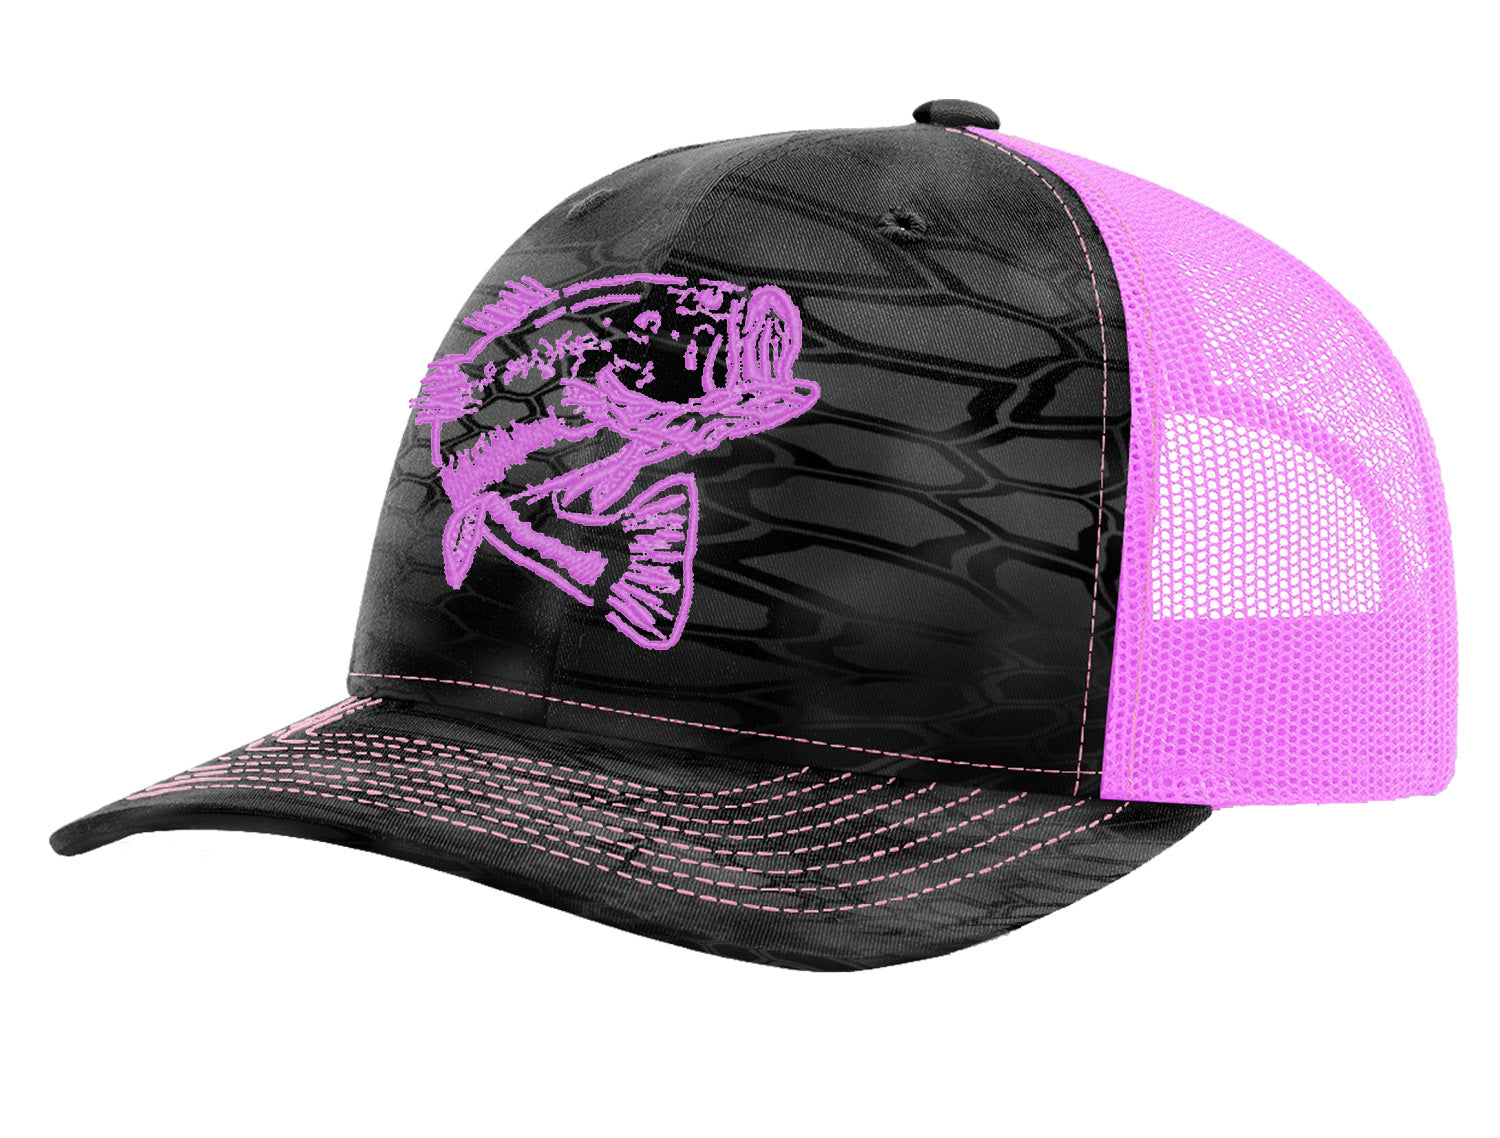 Bass Fishing Reel Hawg Structured Trucker Hats - *22 Colors! Kryptek Neon Pink